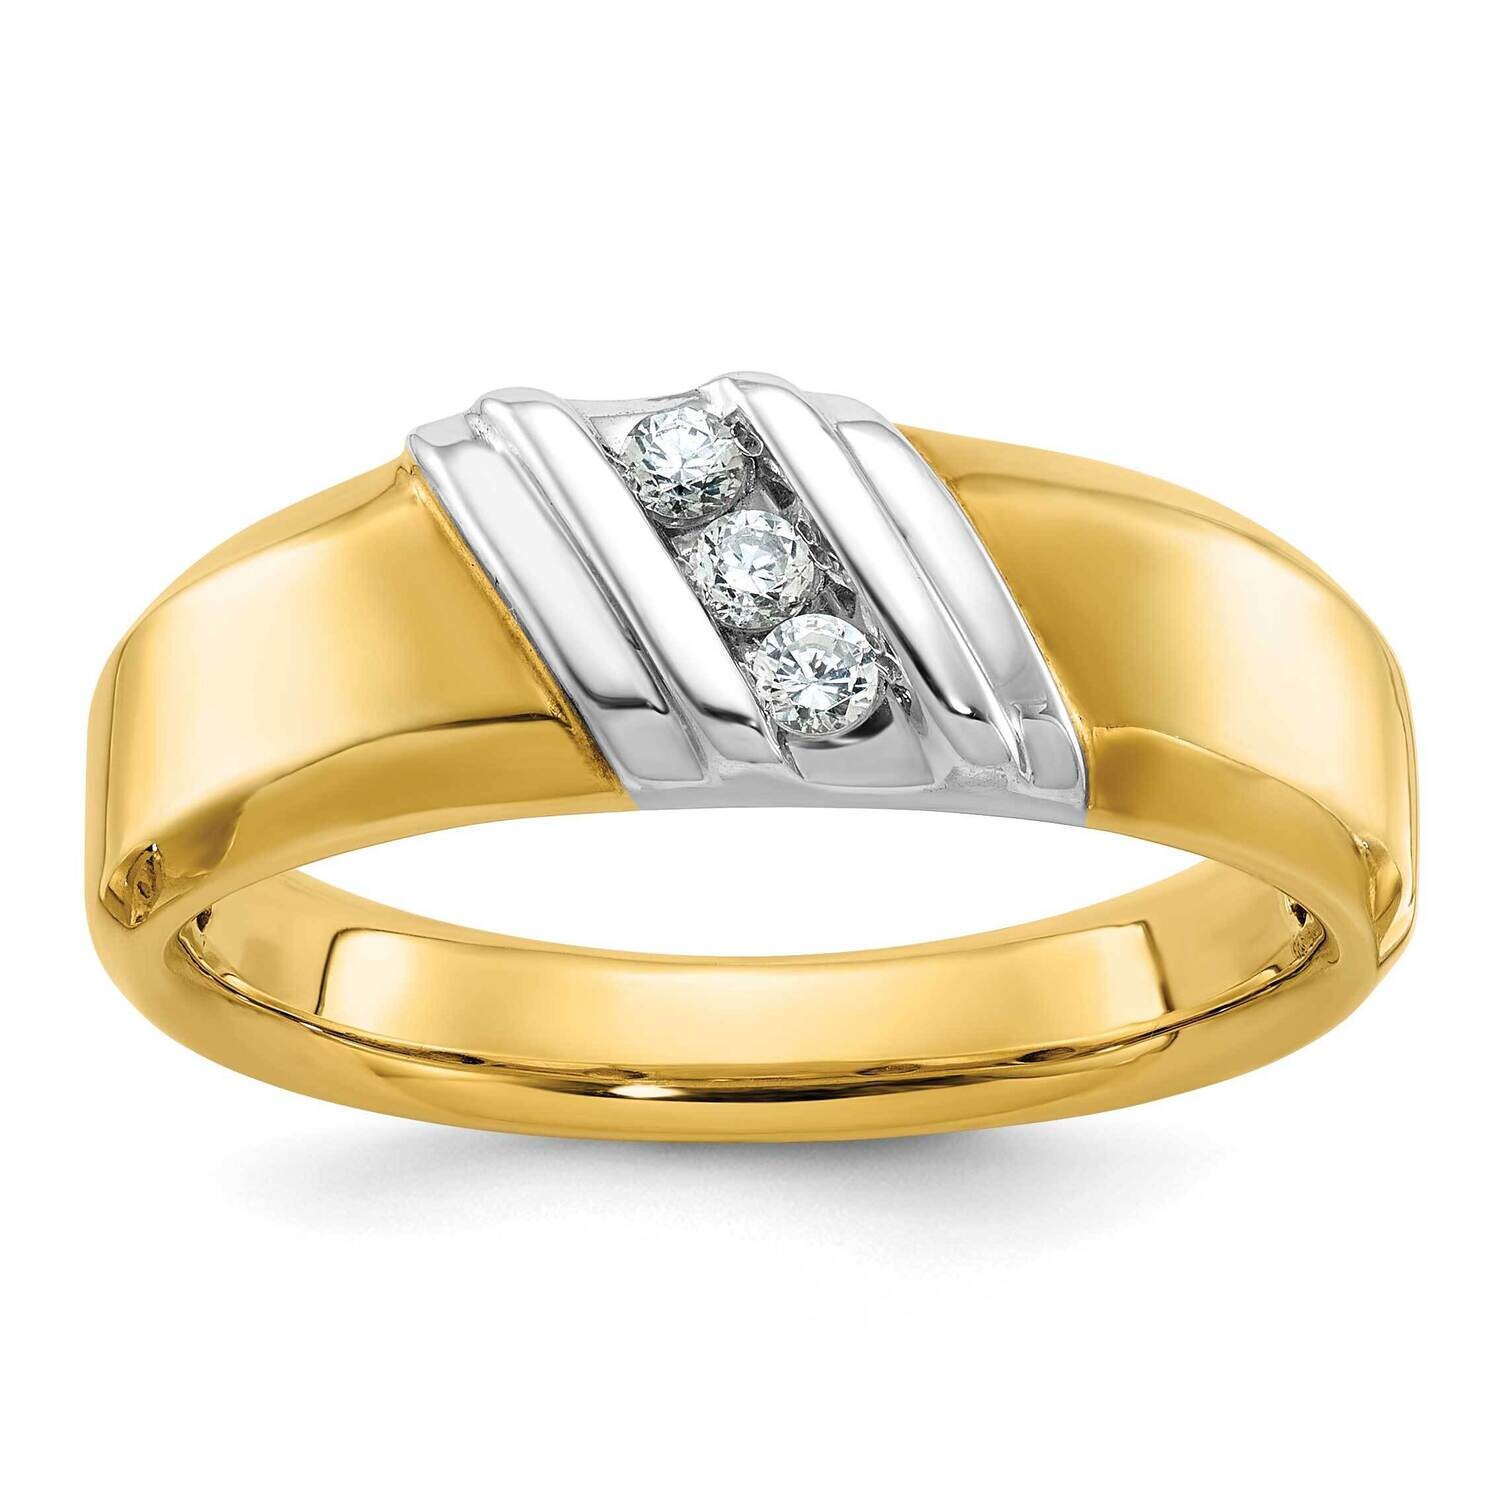 Ibgoodman Men's Polished 3-Stone 1/6 Carat Aa Quality Diamond Ring 14k Two-Tone Gold B63239-4YWAA